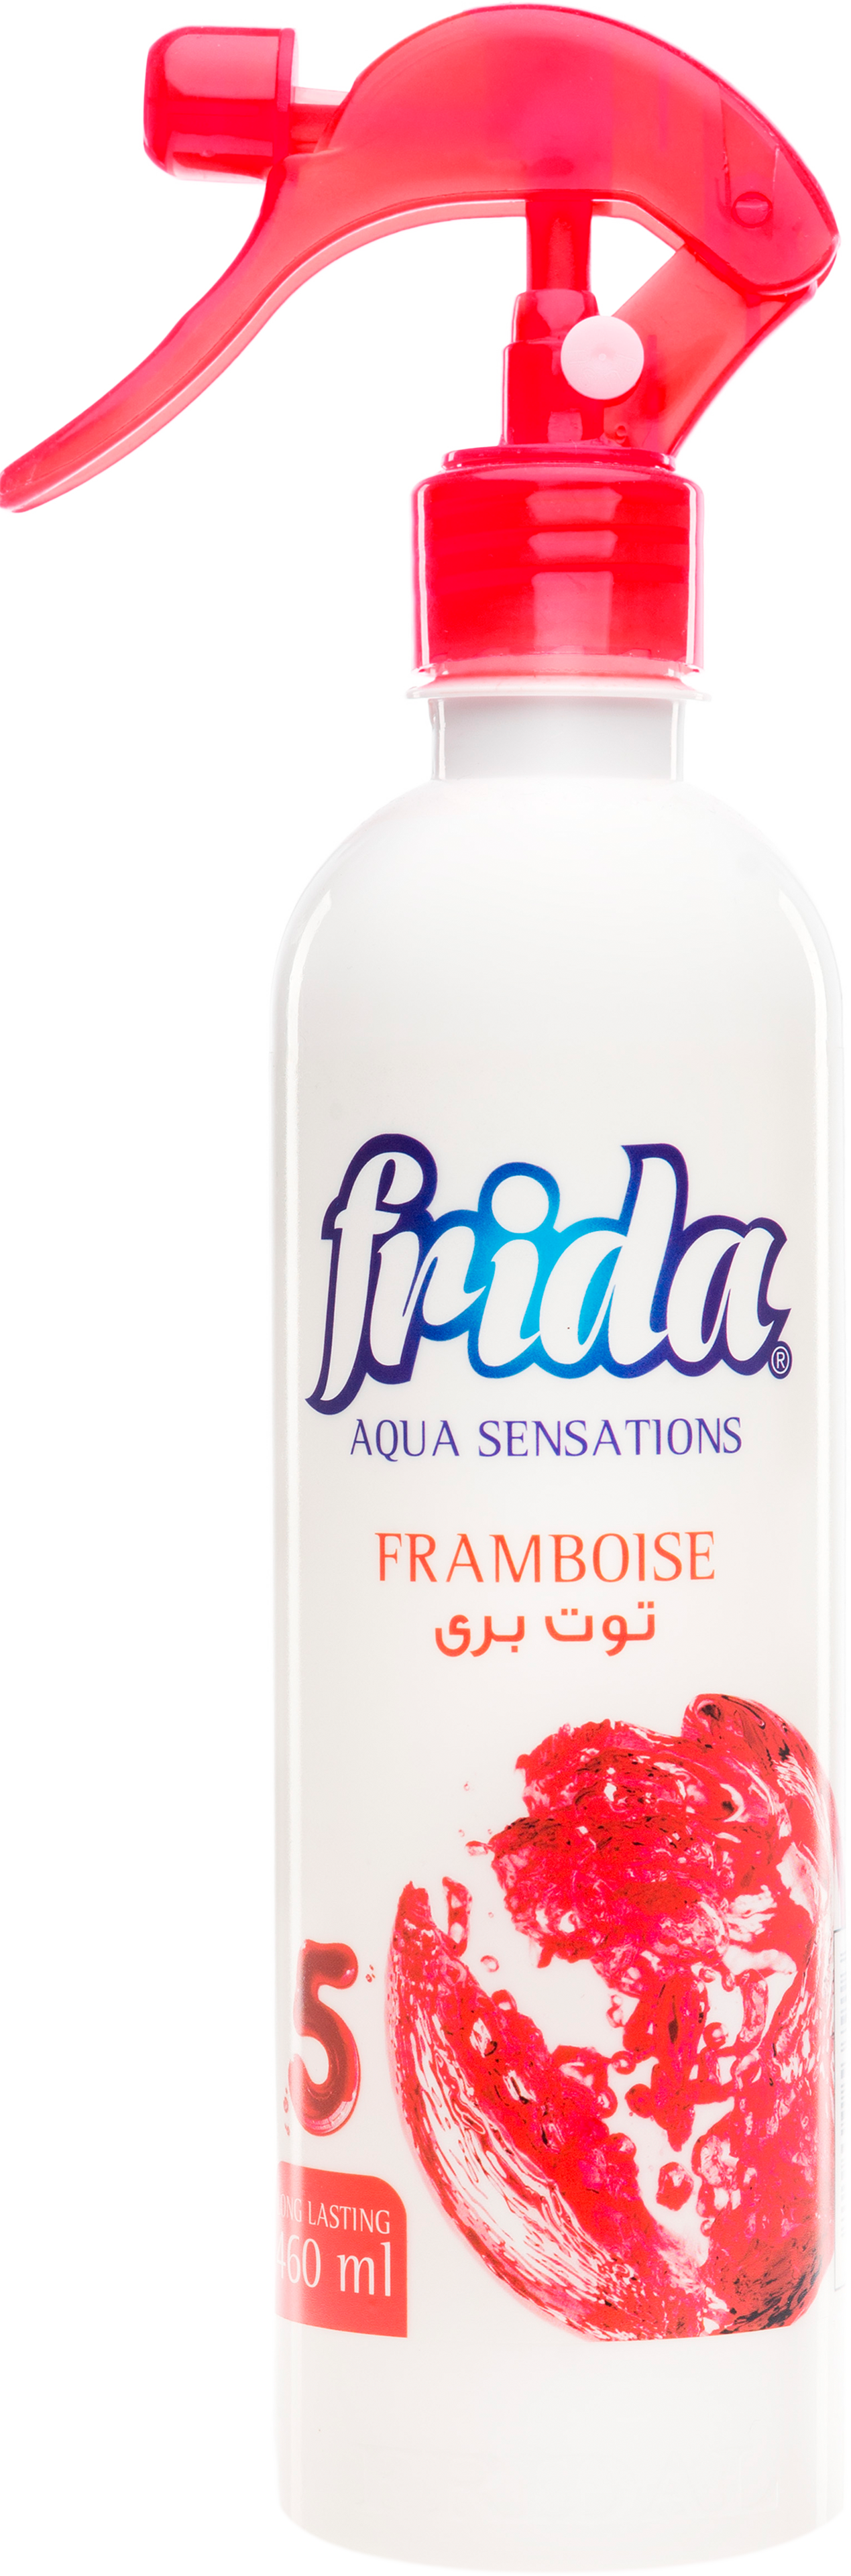 Frida Aqua Sensations "Framboise"